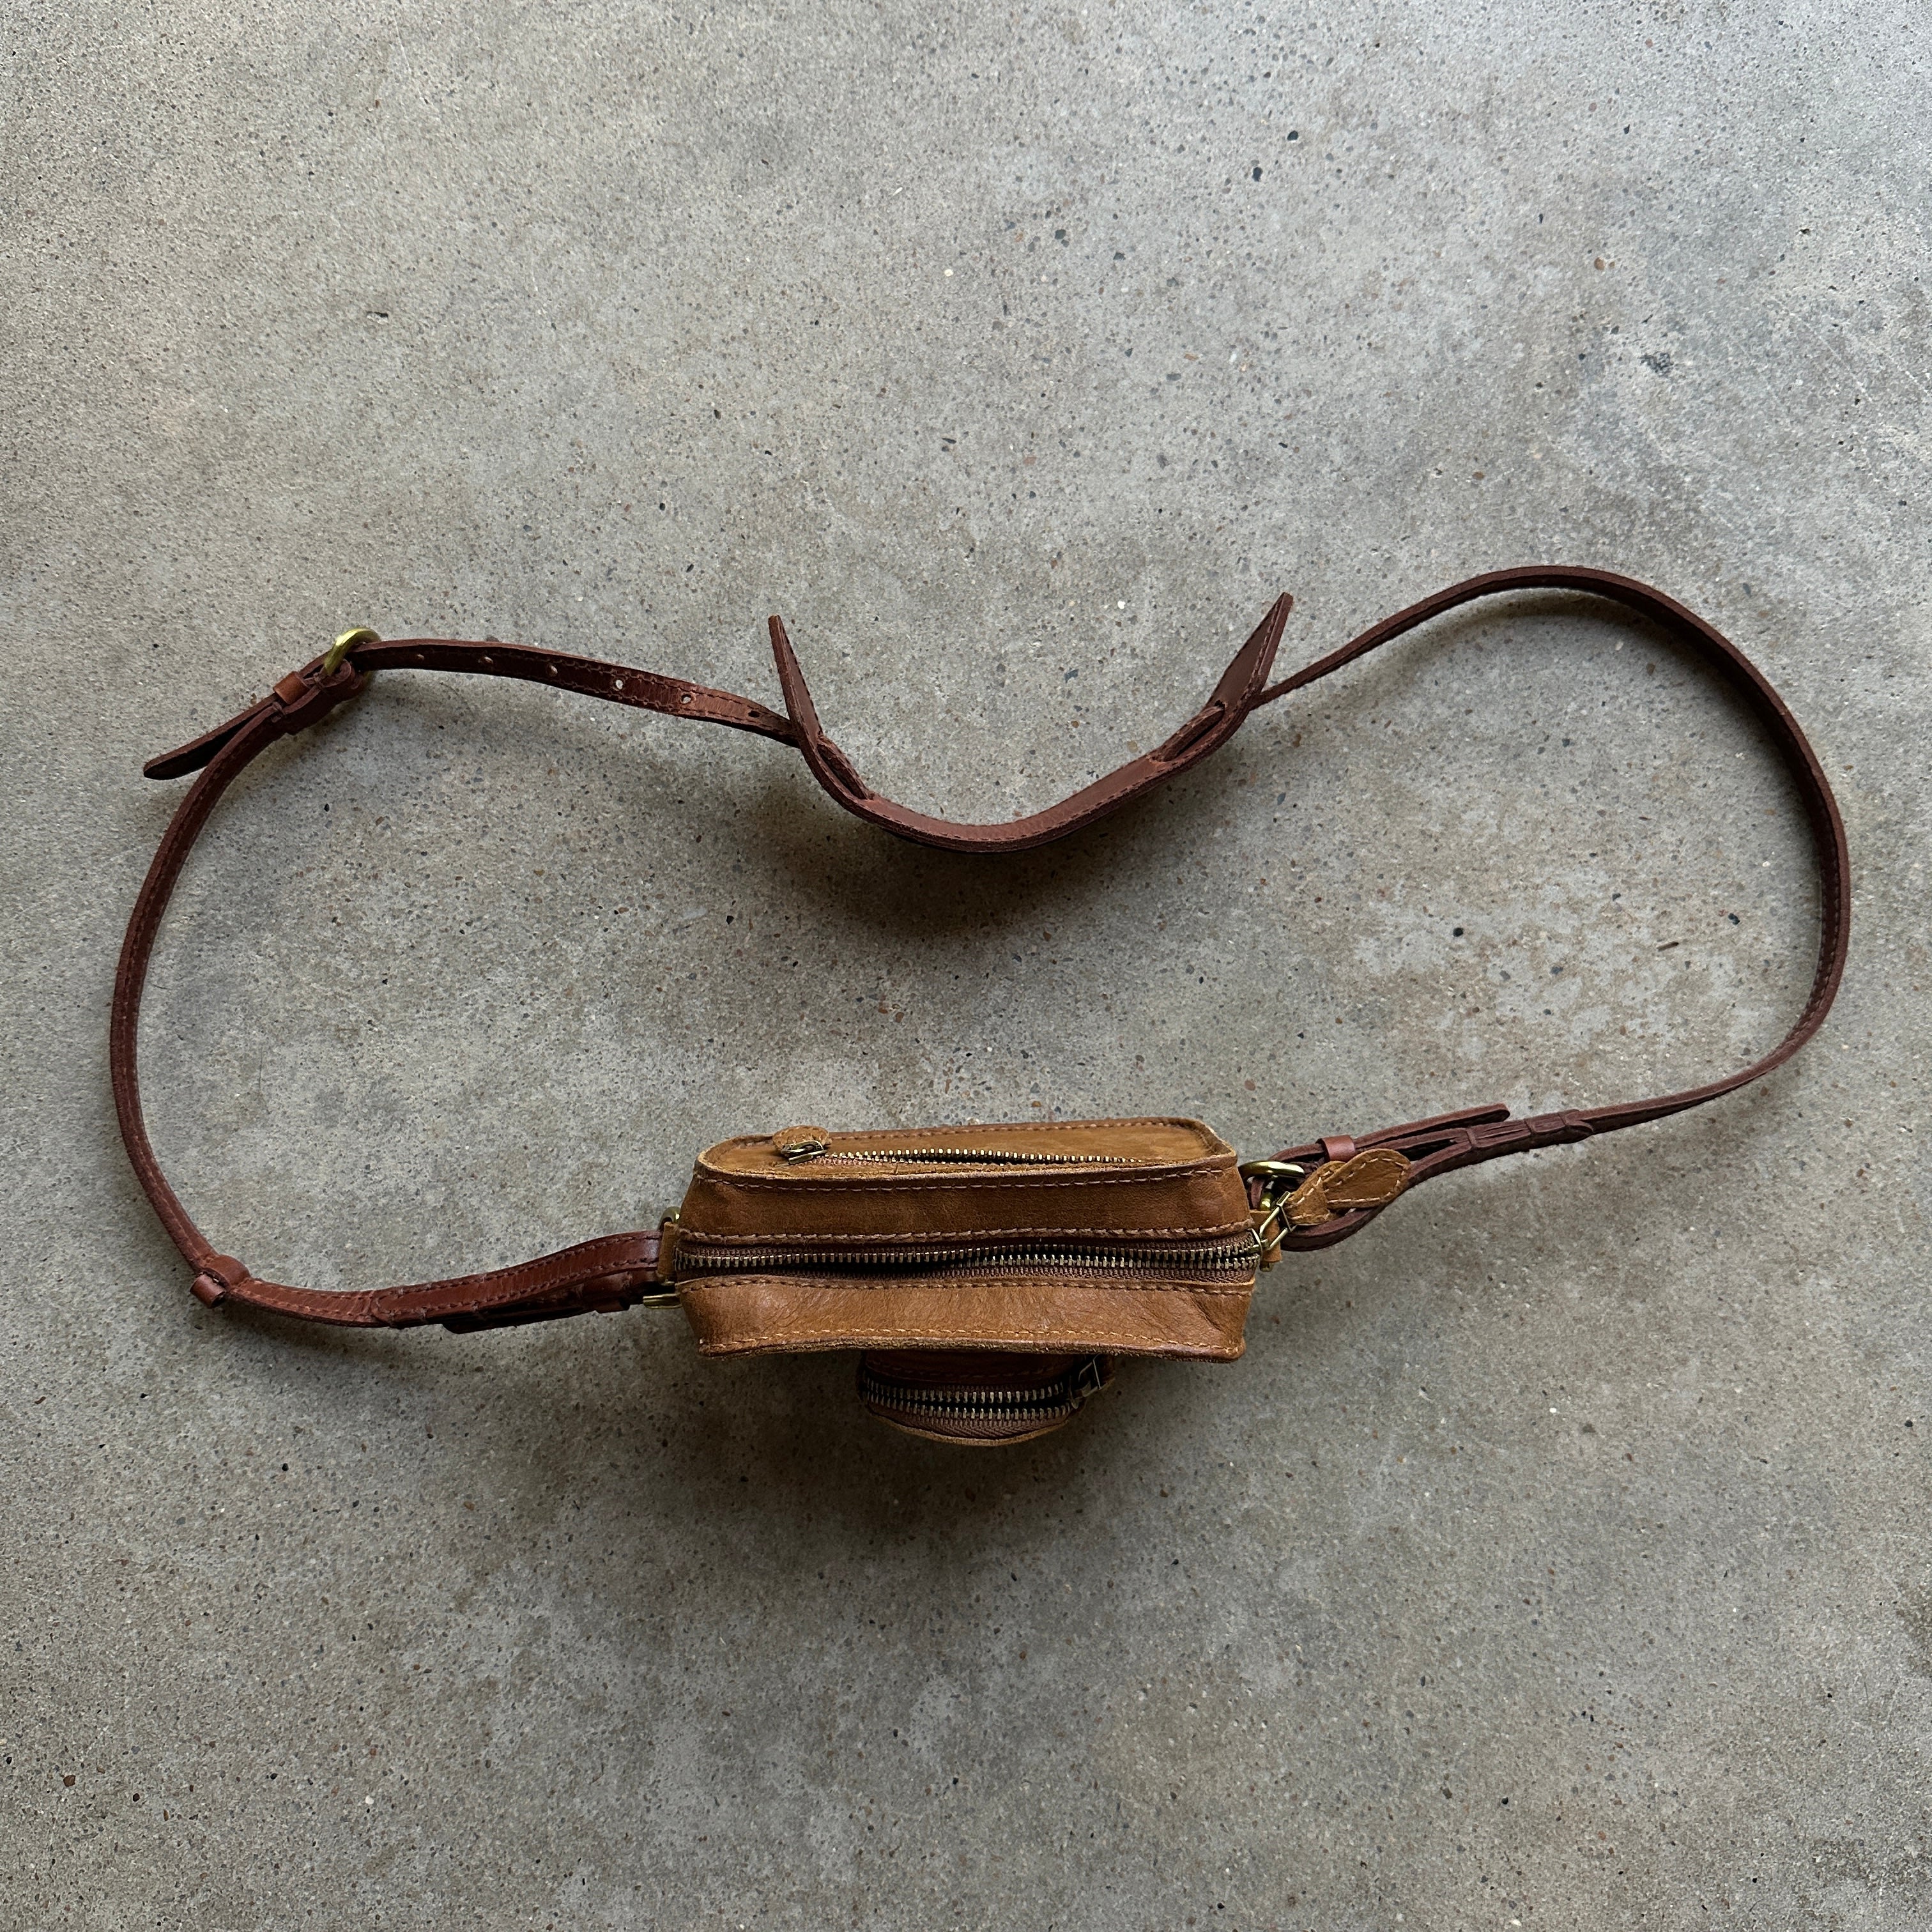 “Madewell” Camera-shaped Leather Crossbody